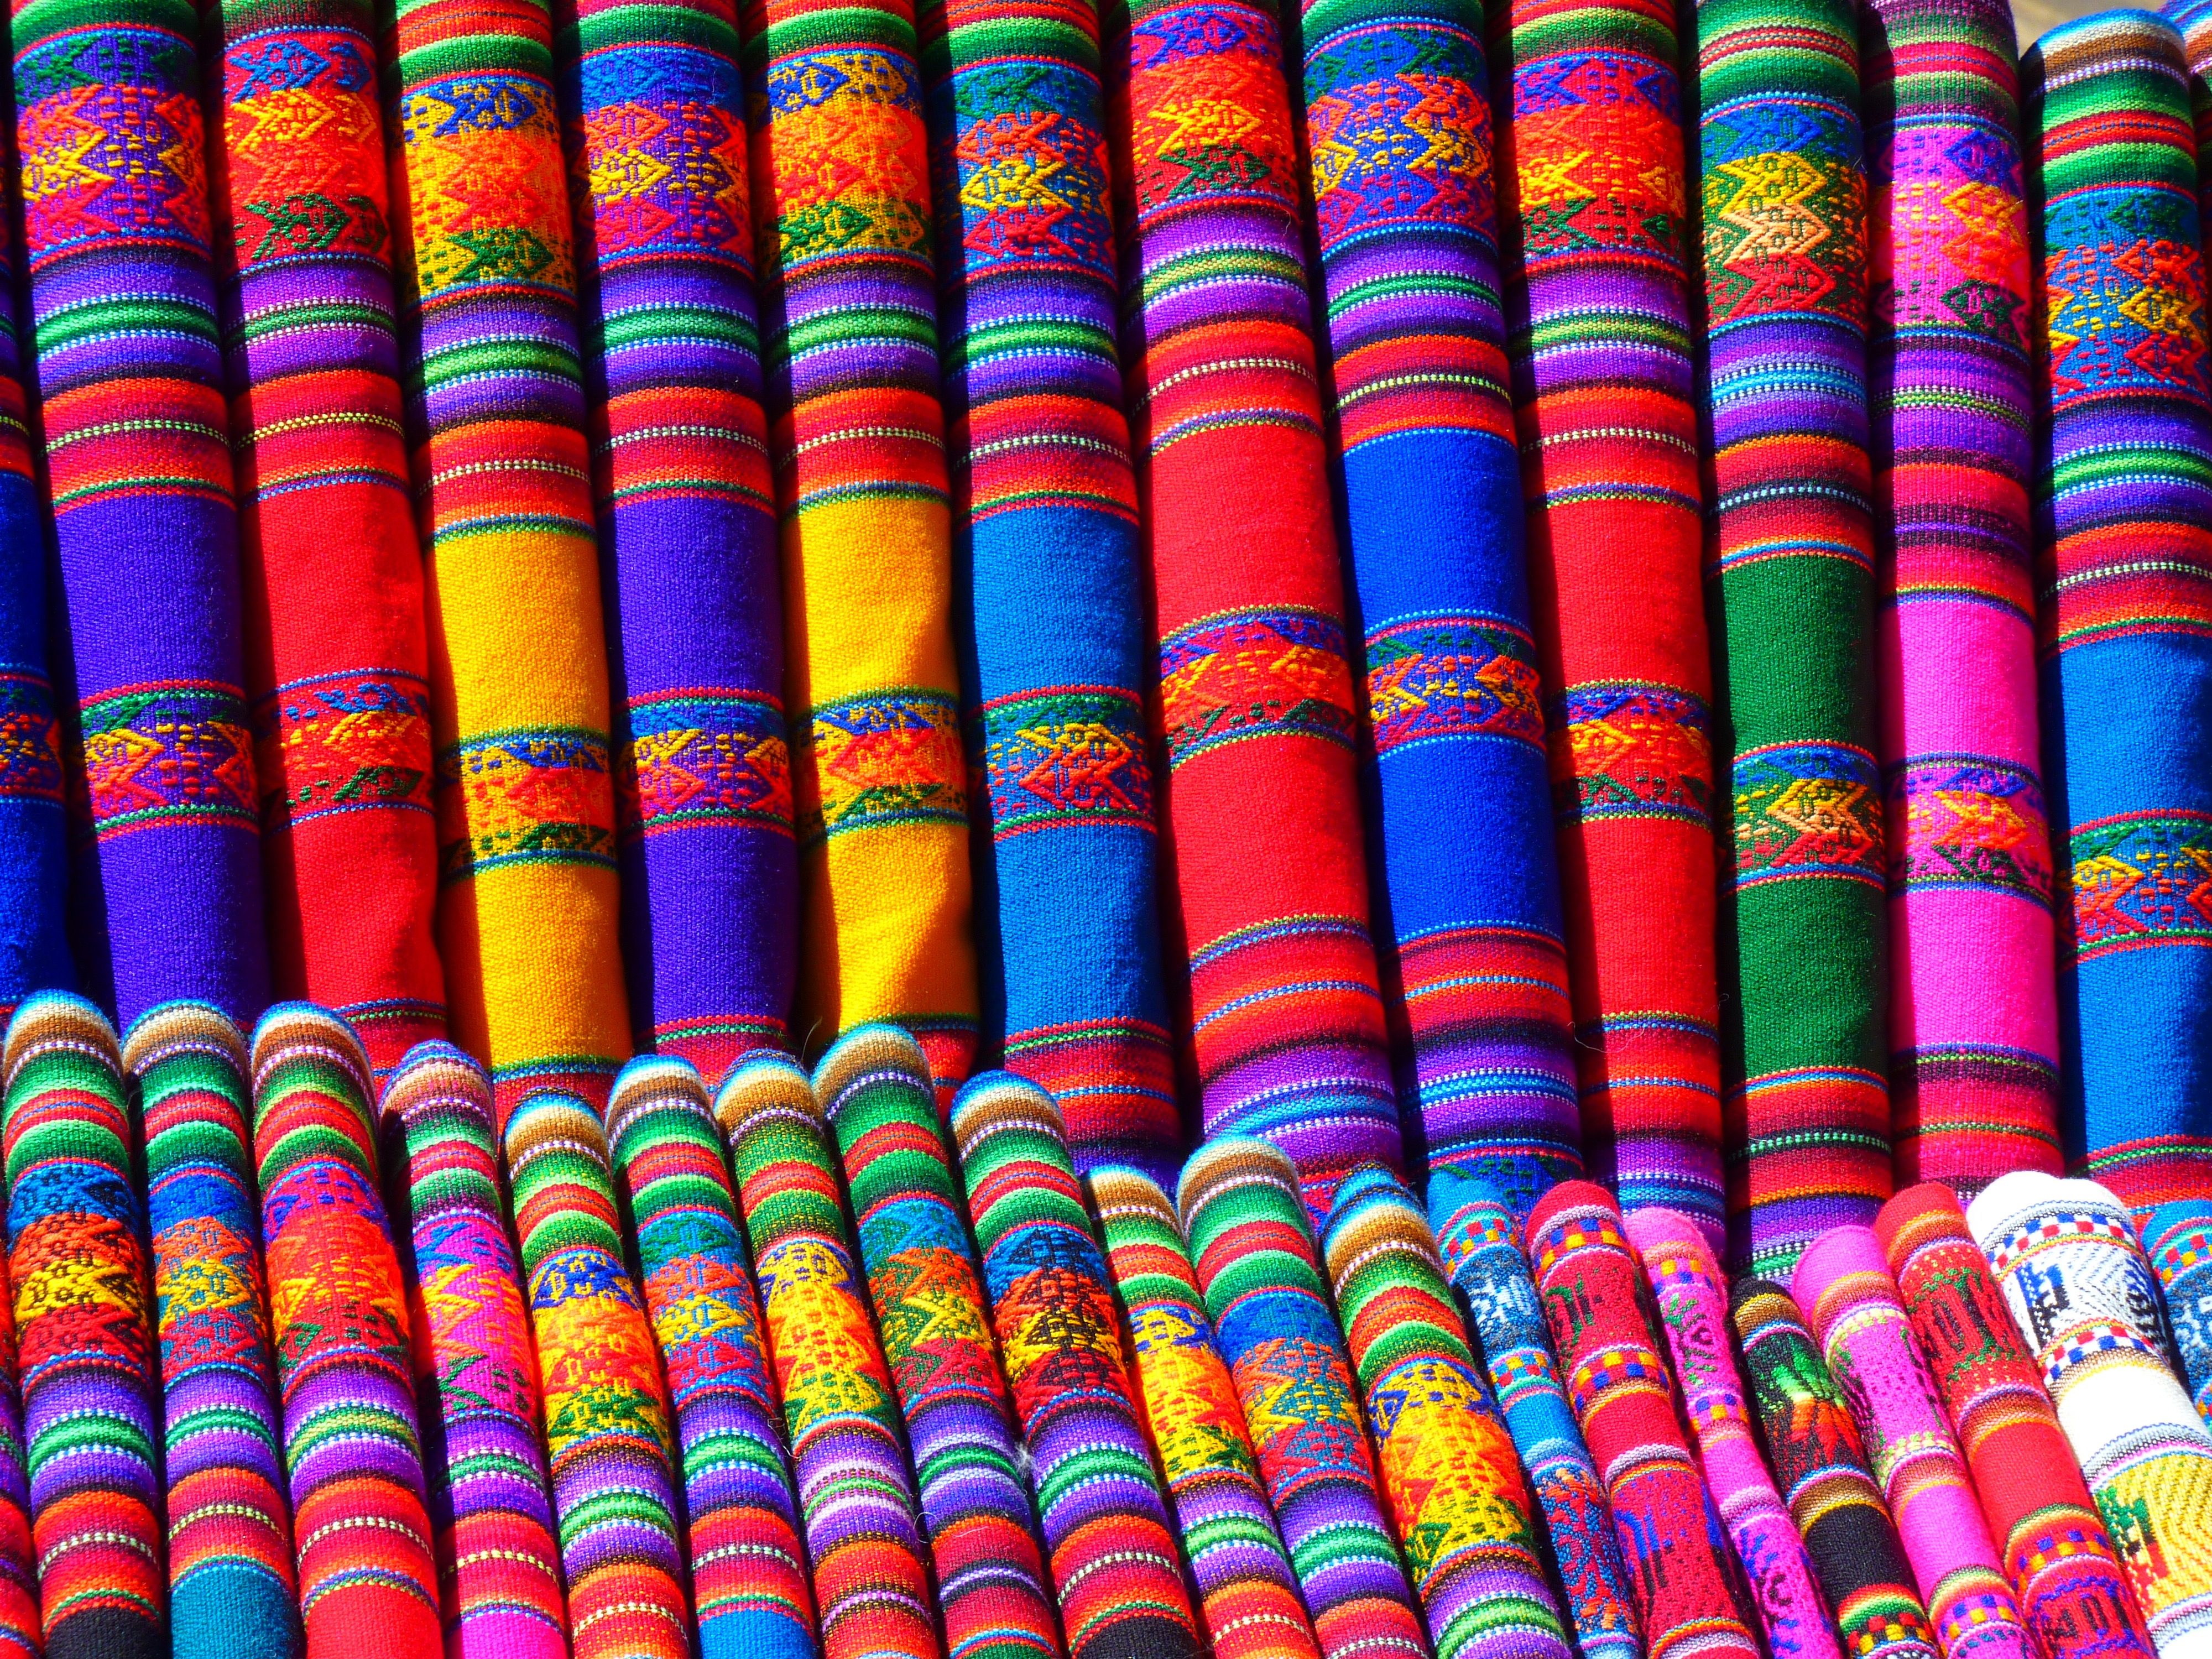 Colorful woven textile patterns